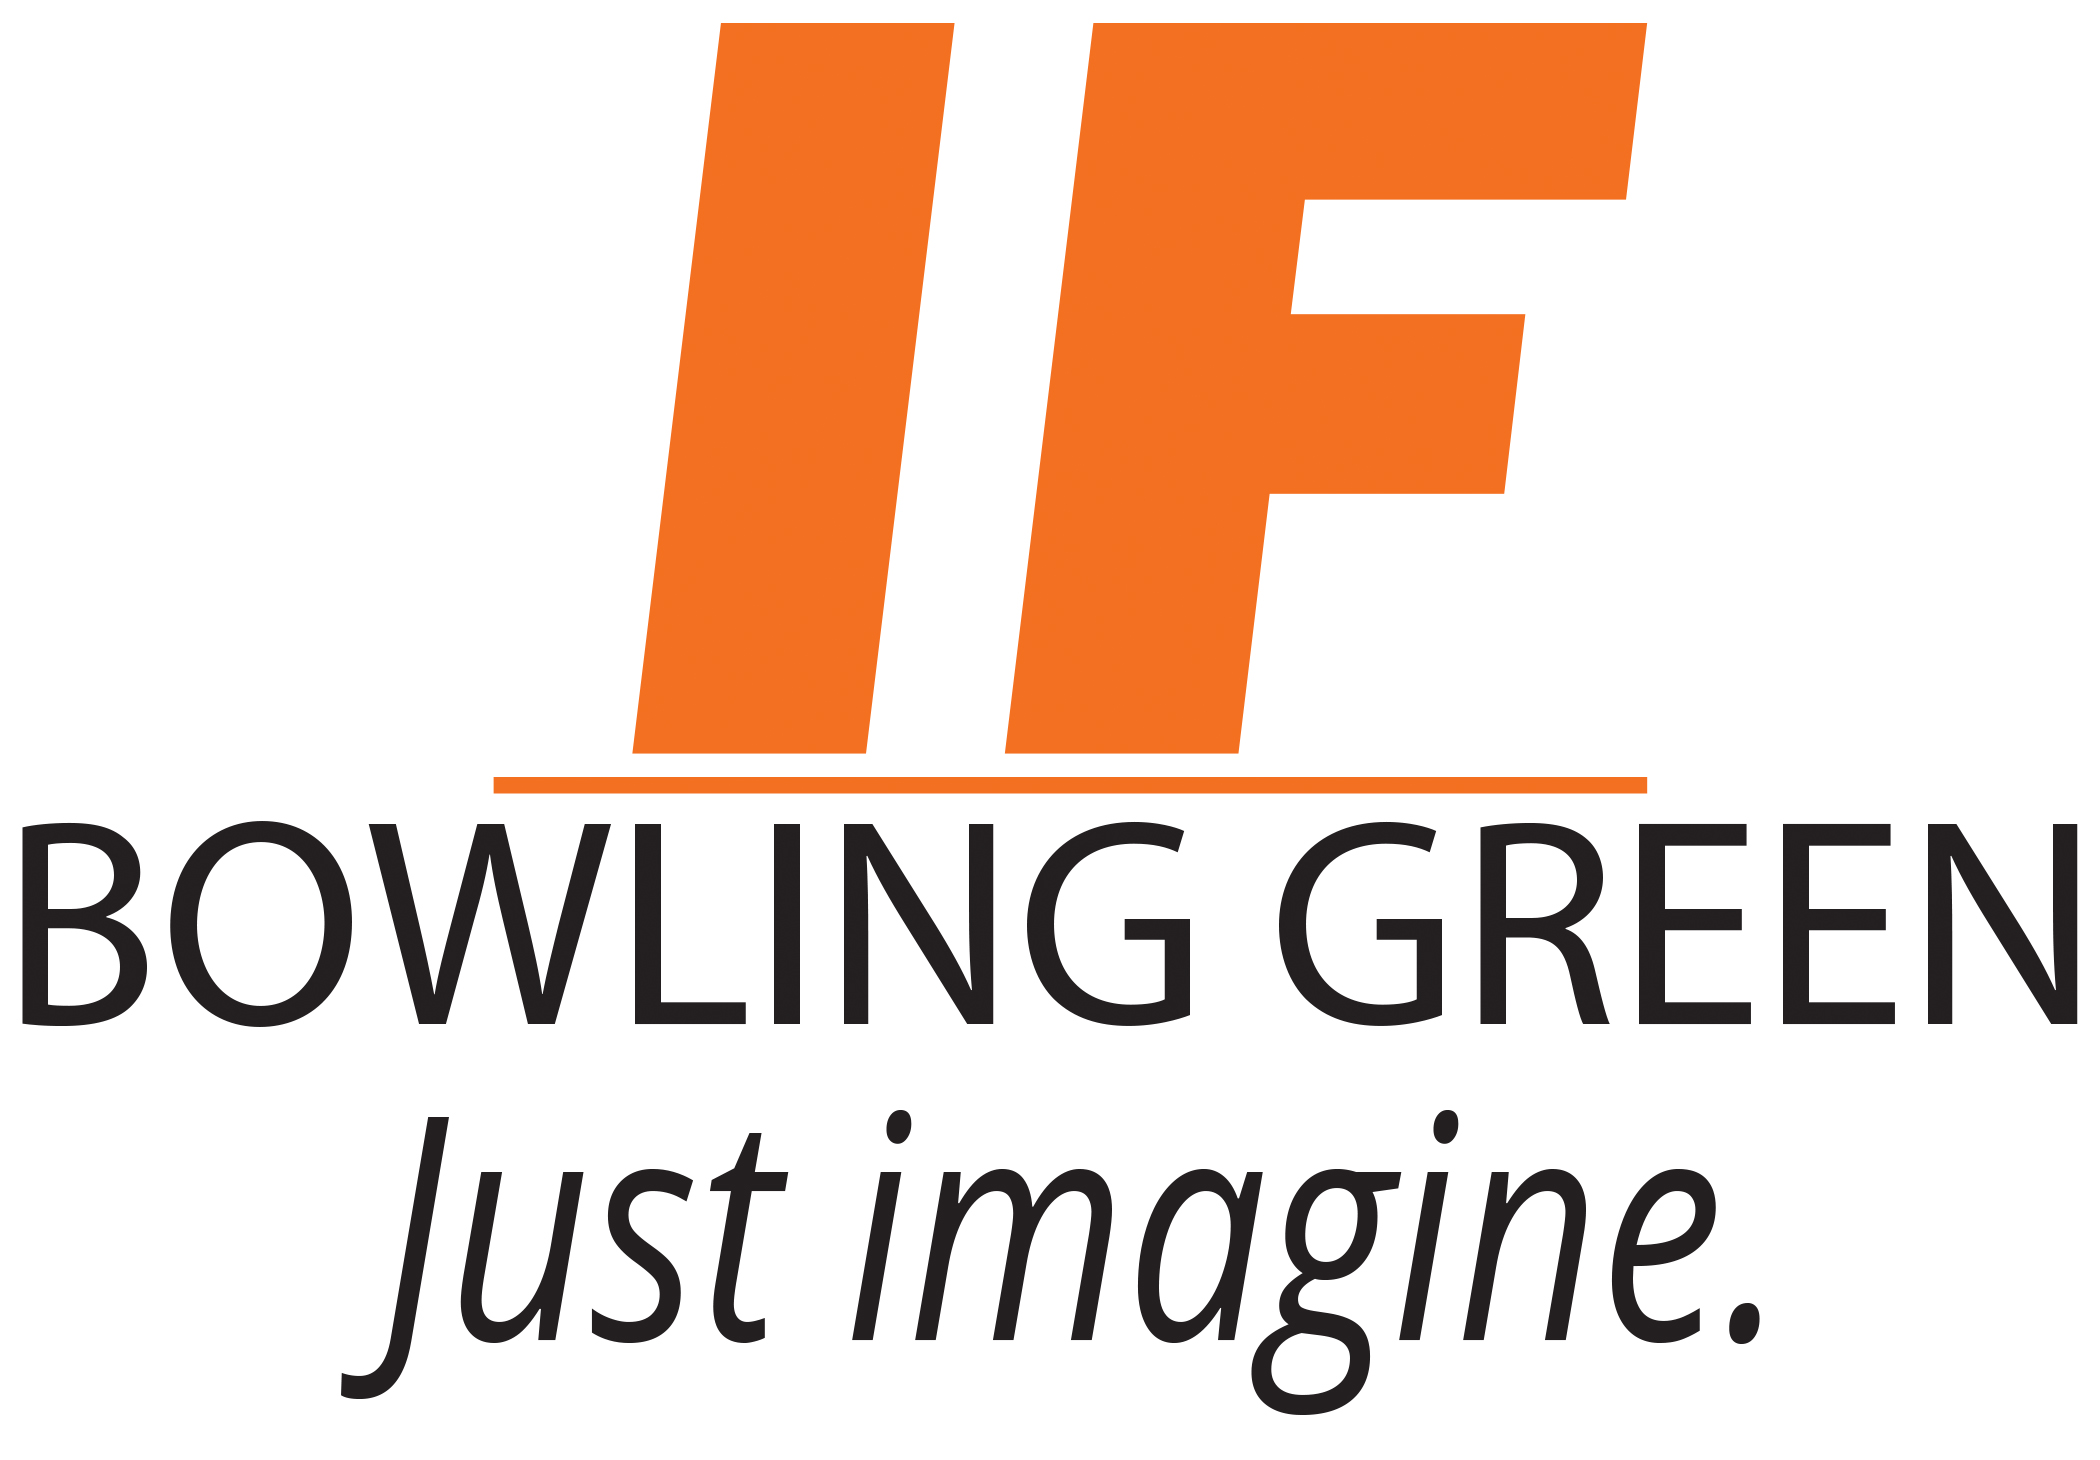 IdeaFestival Bowling Green Just Imagine logo